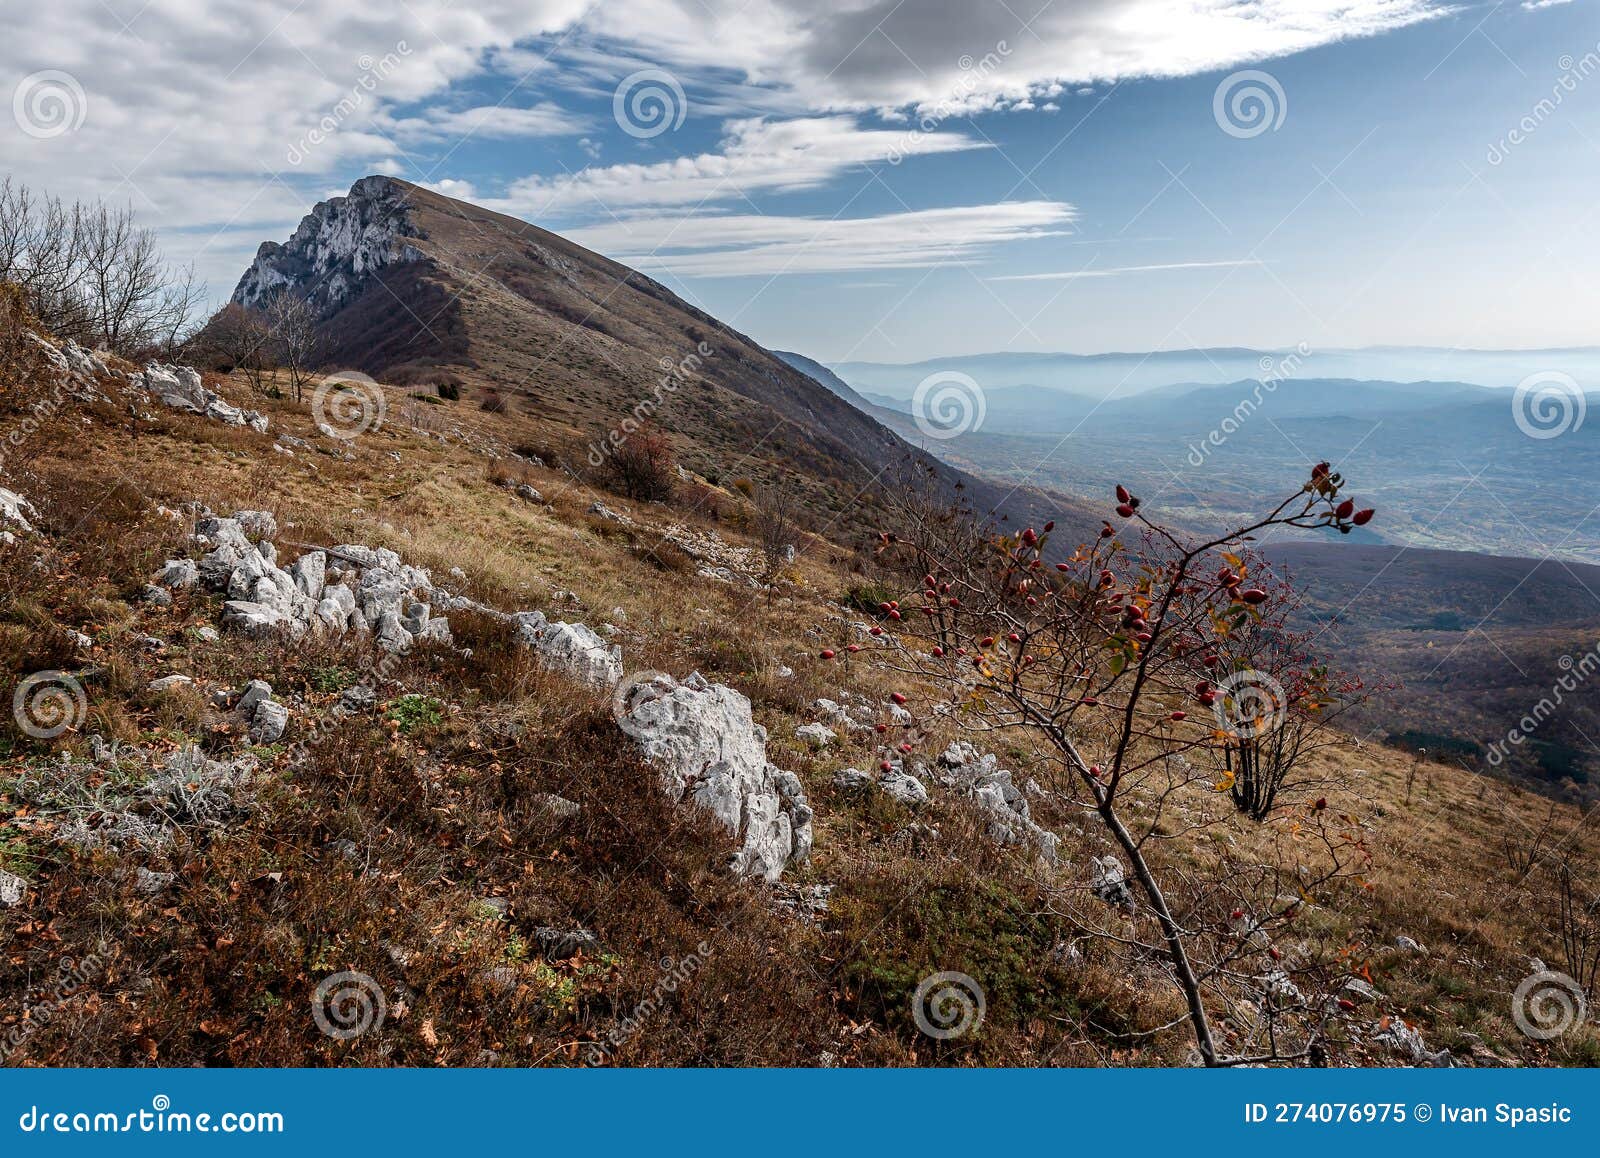 trem, highest peak of dry mountain in serbia